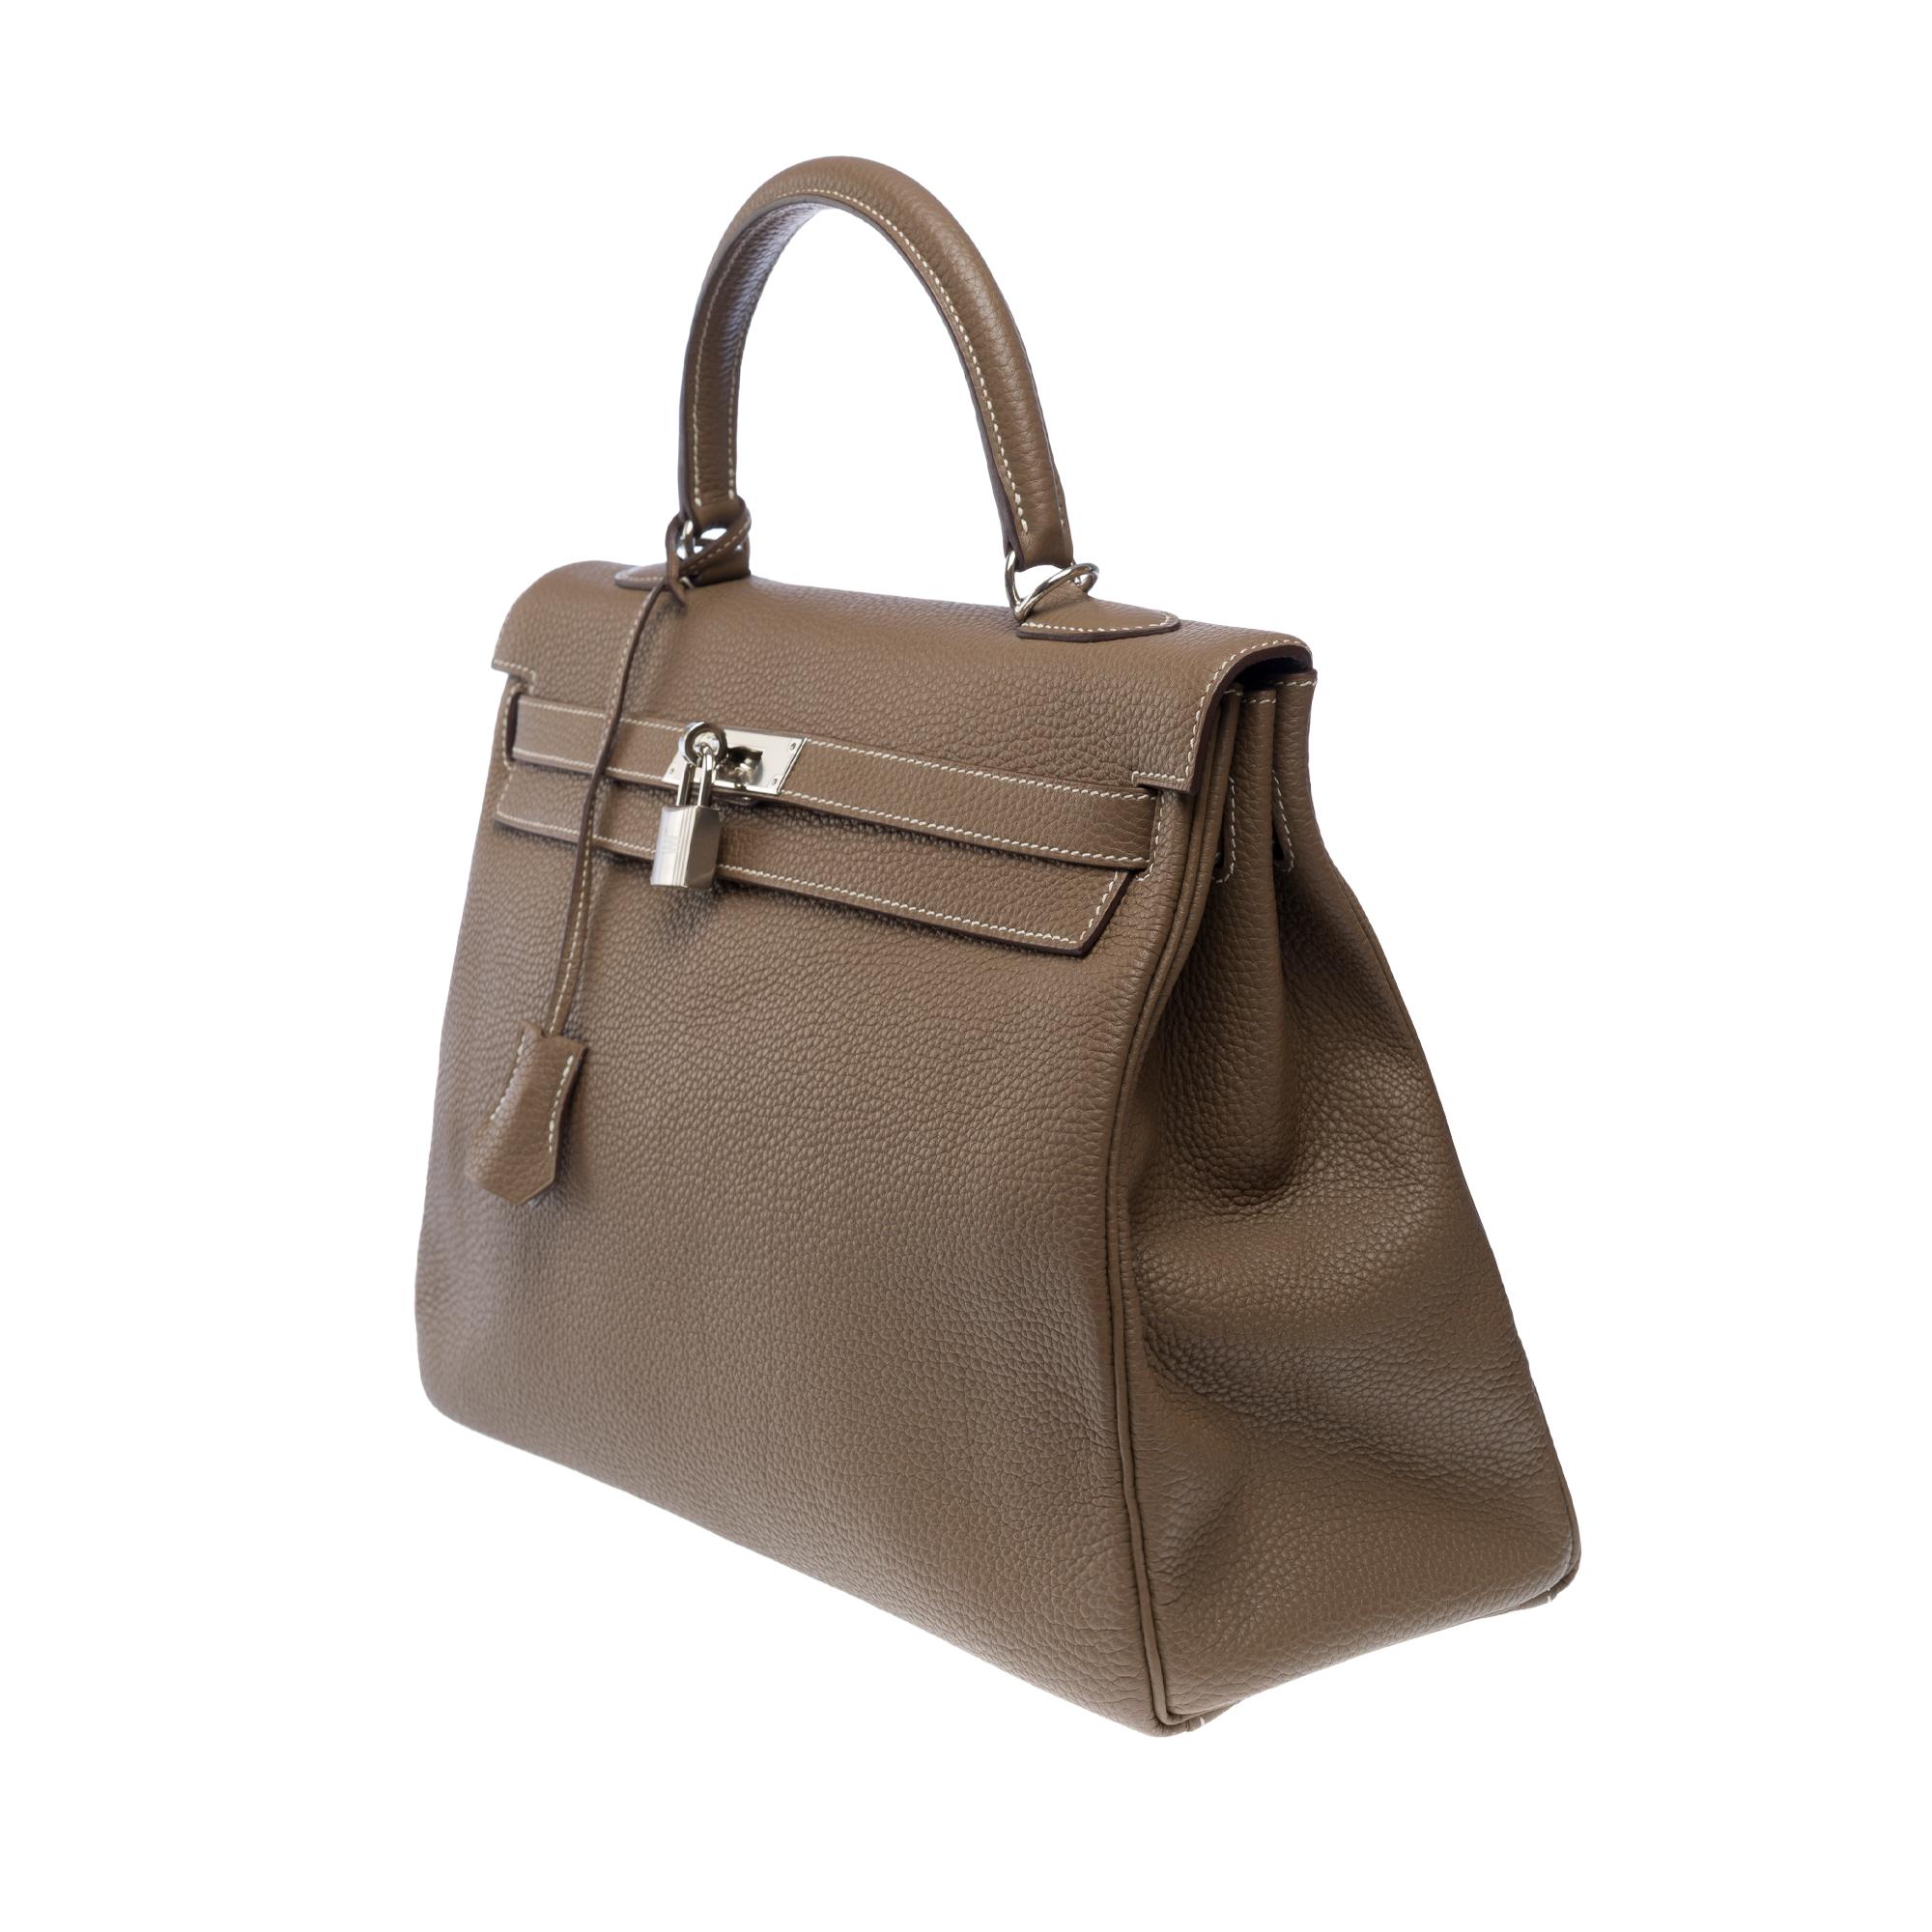 Brown Almost New Hermès Kelly 35 retourne handbag strap in Etoupe Togo leather, SHW For Sale